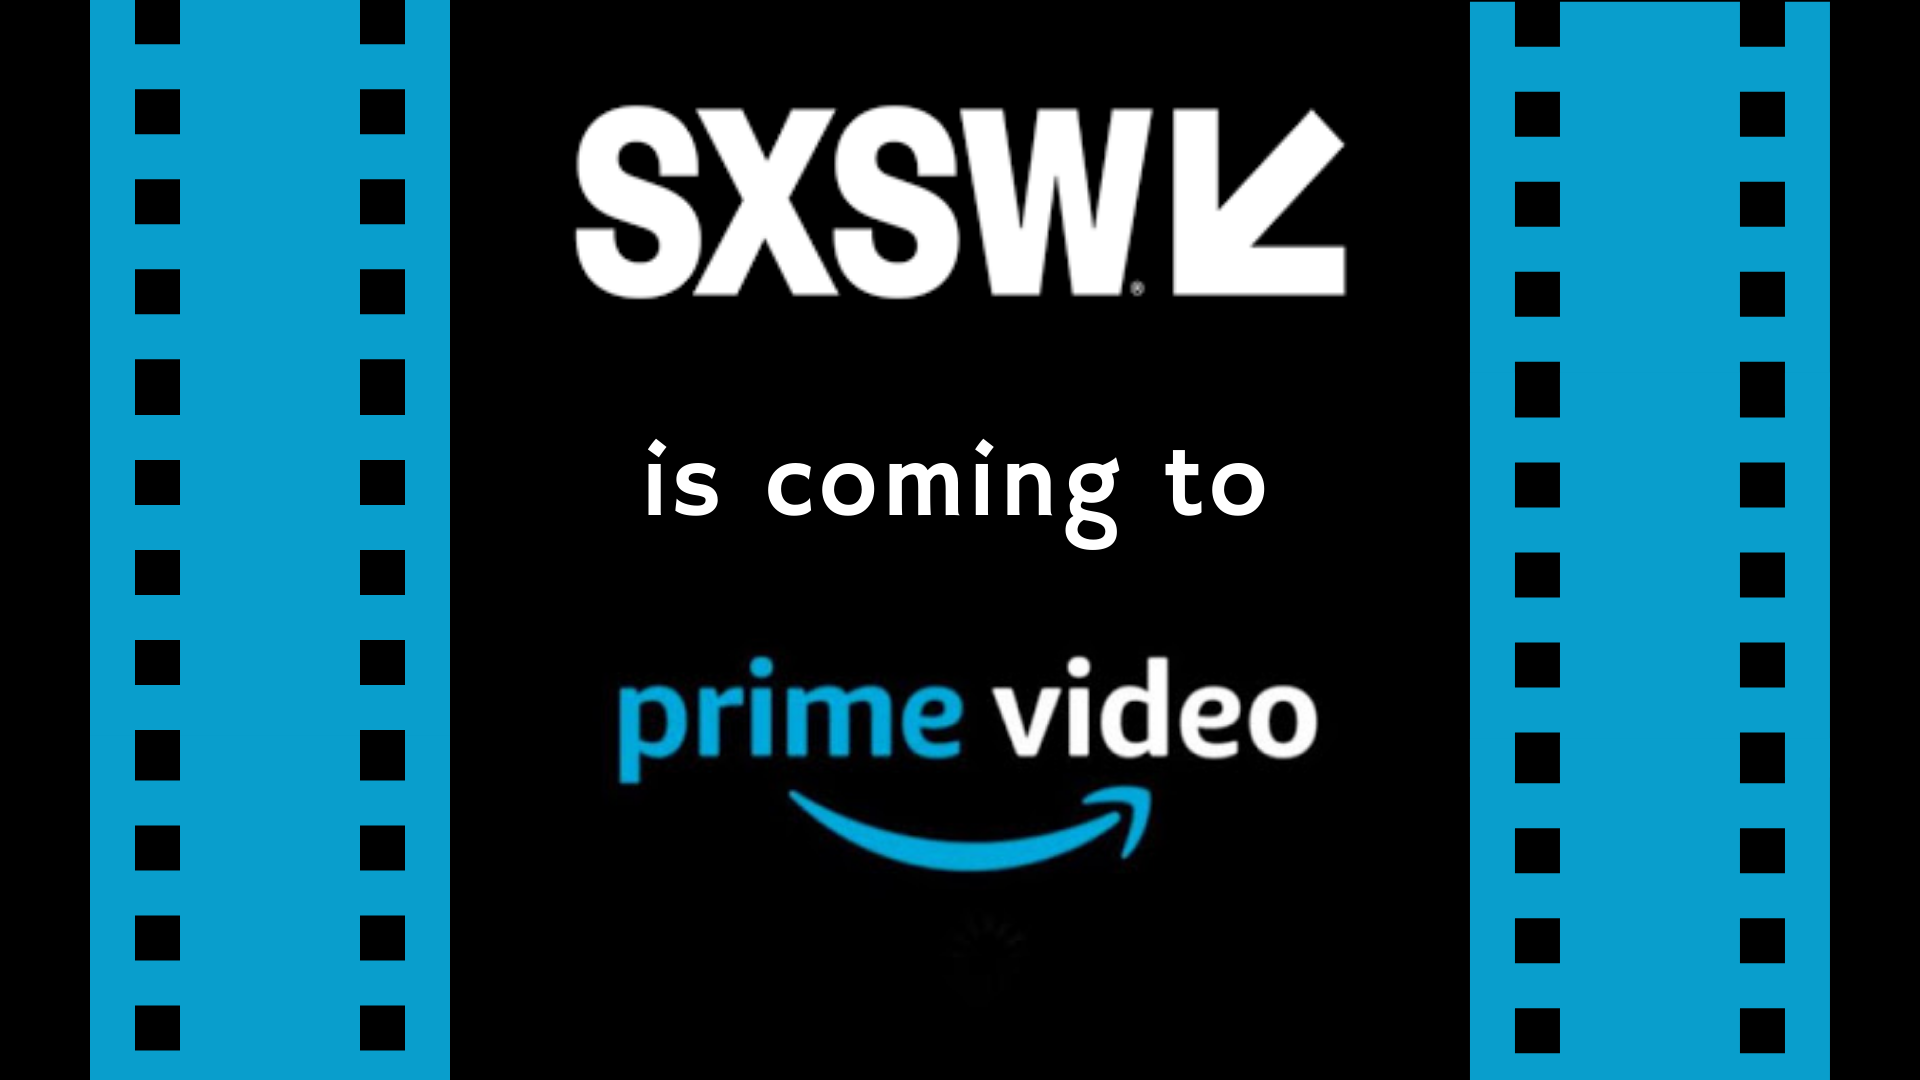 "SXSW is coming to Amazon Prime Video."